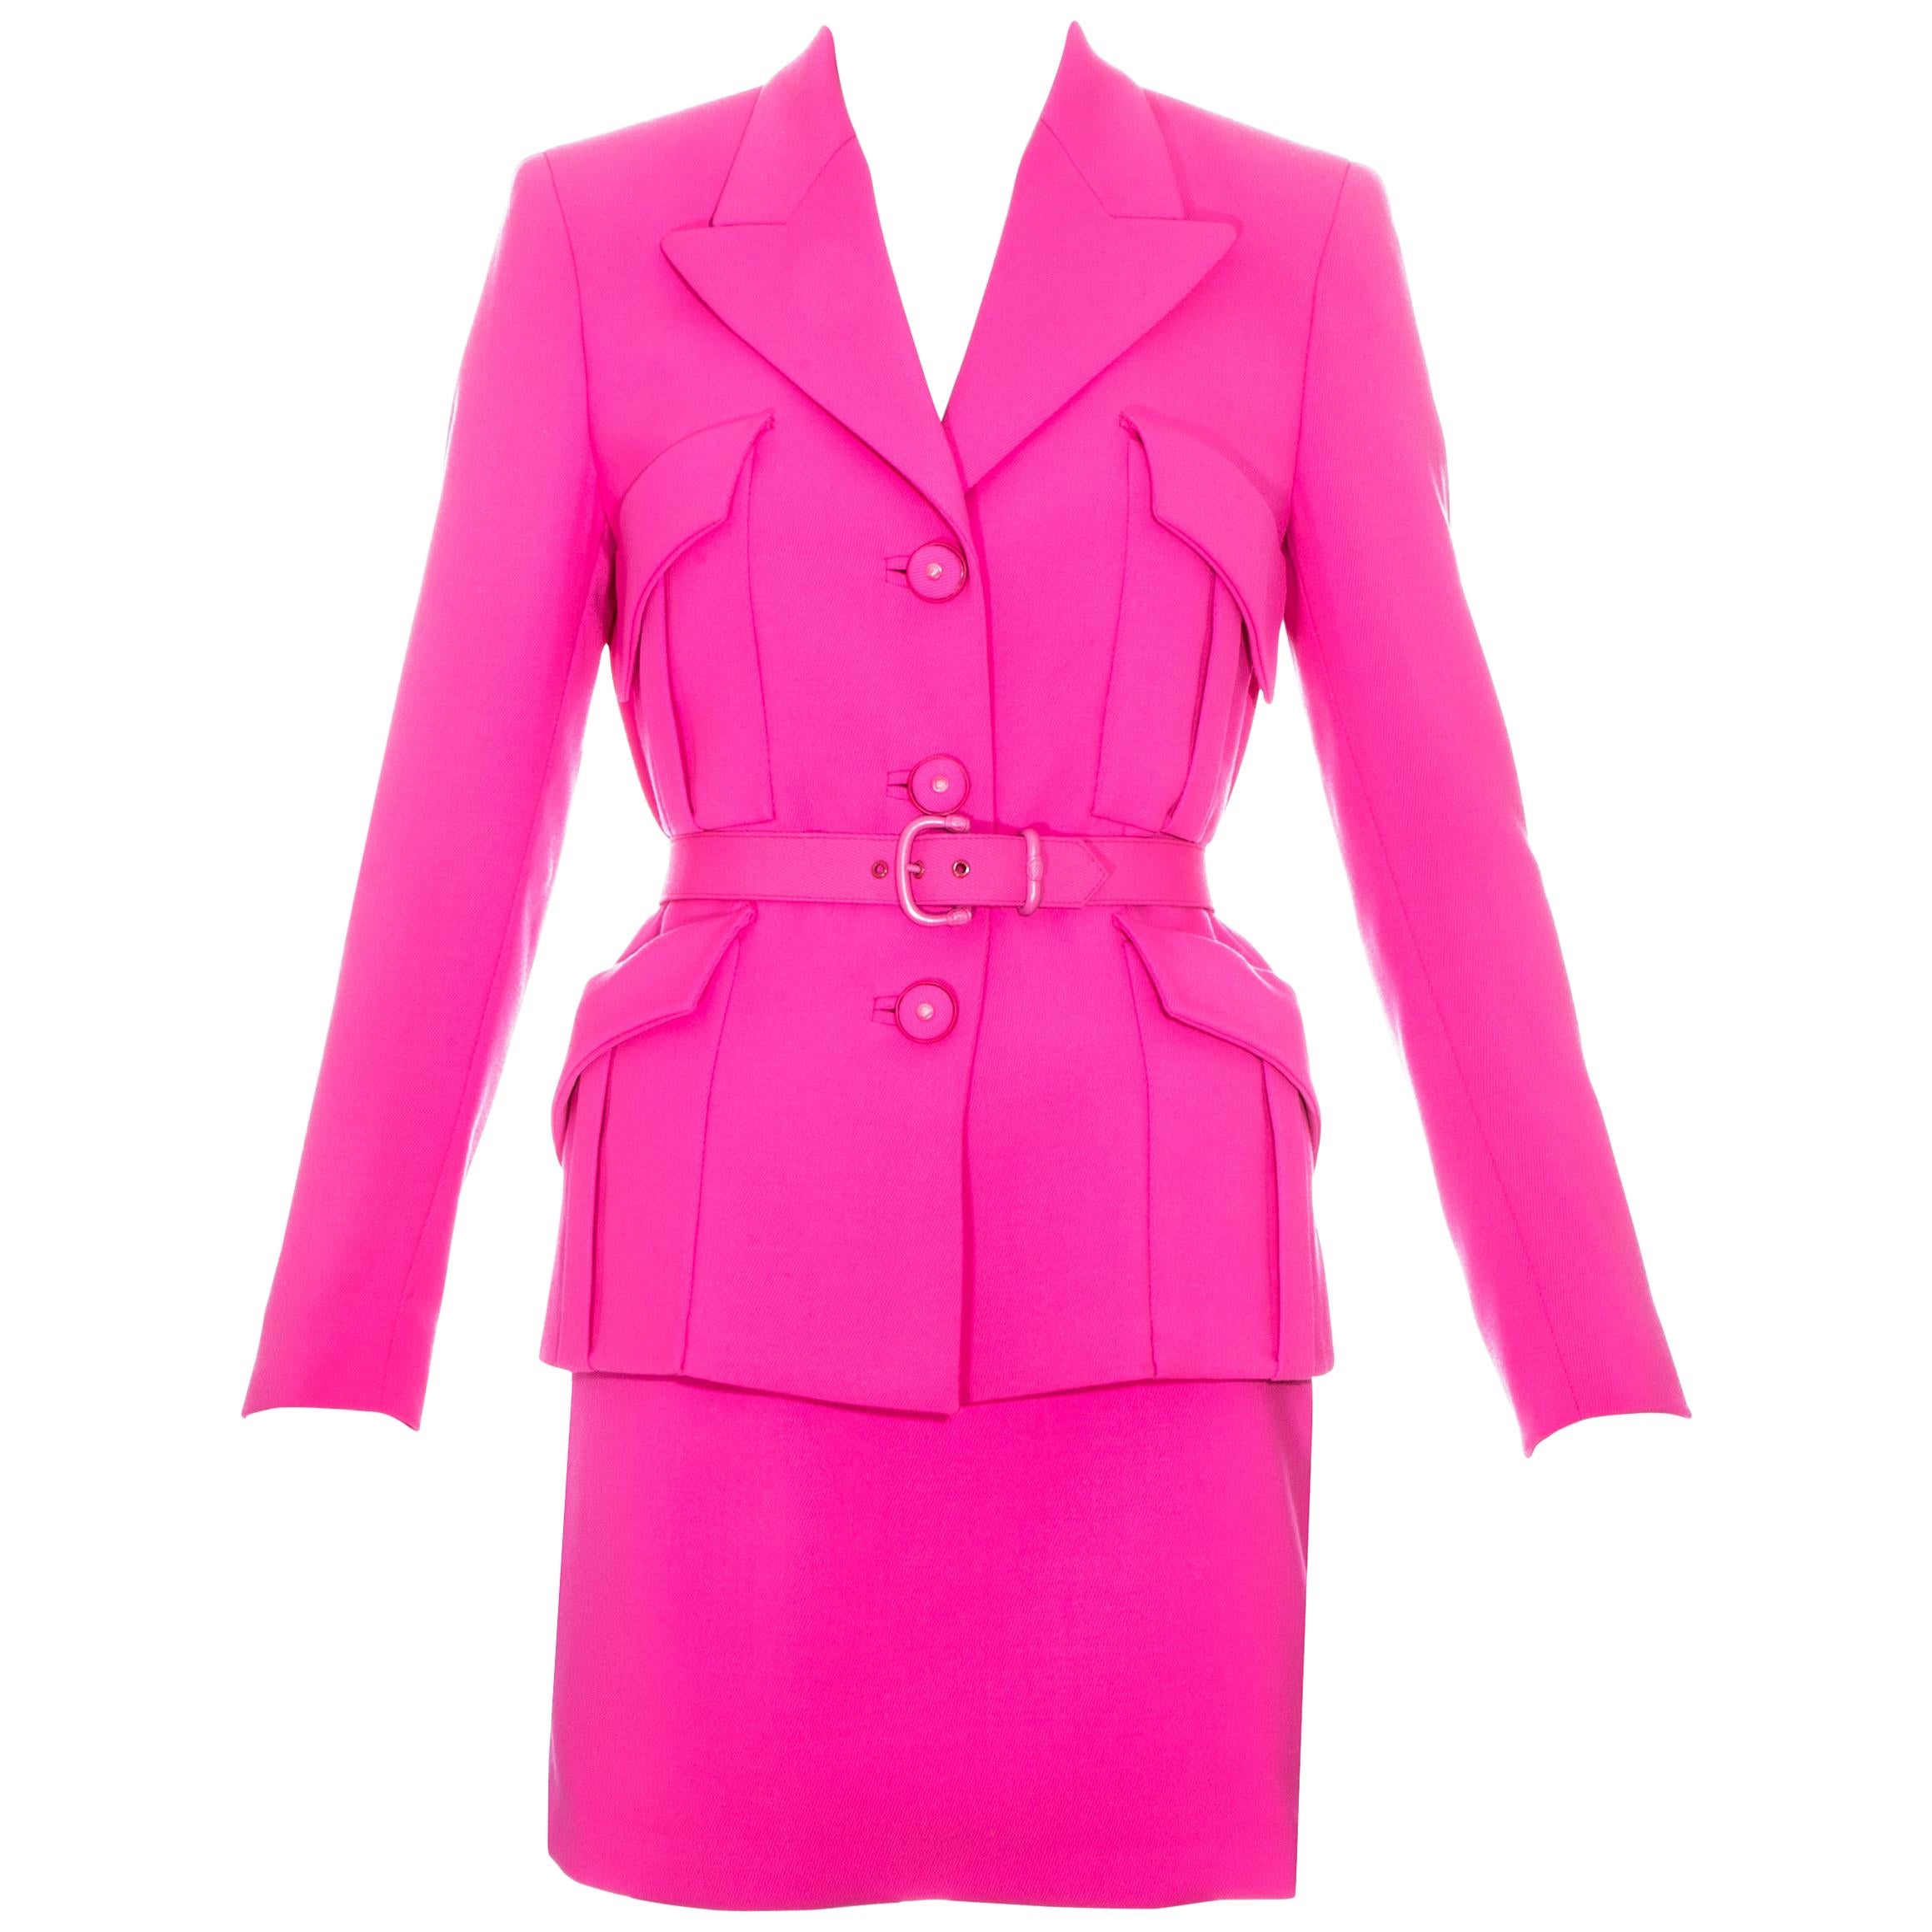 Gianni Versace neon pink wool mini skirt suit, fw 1996